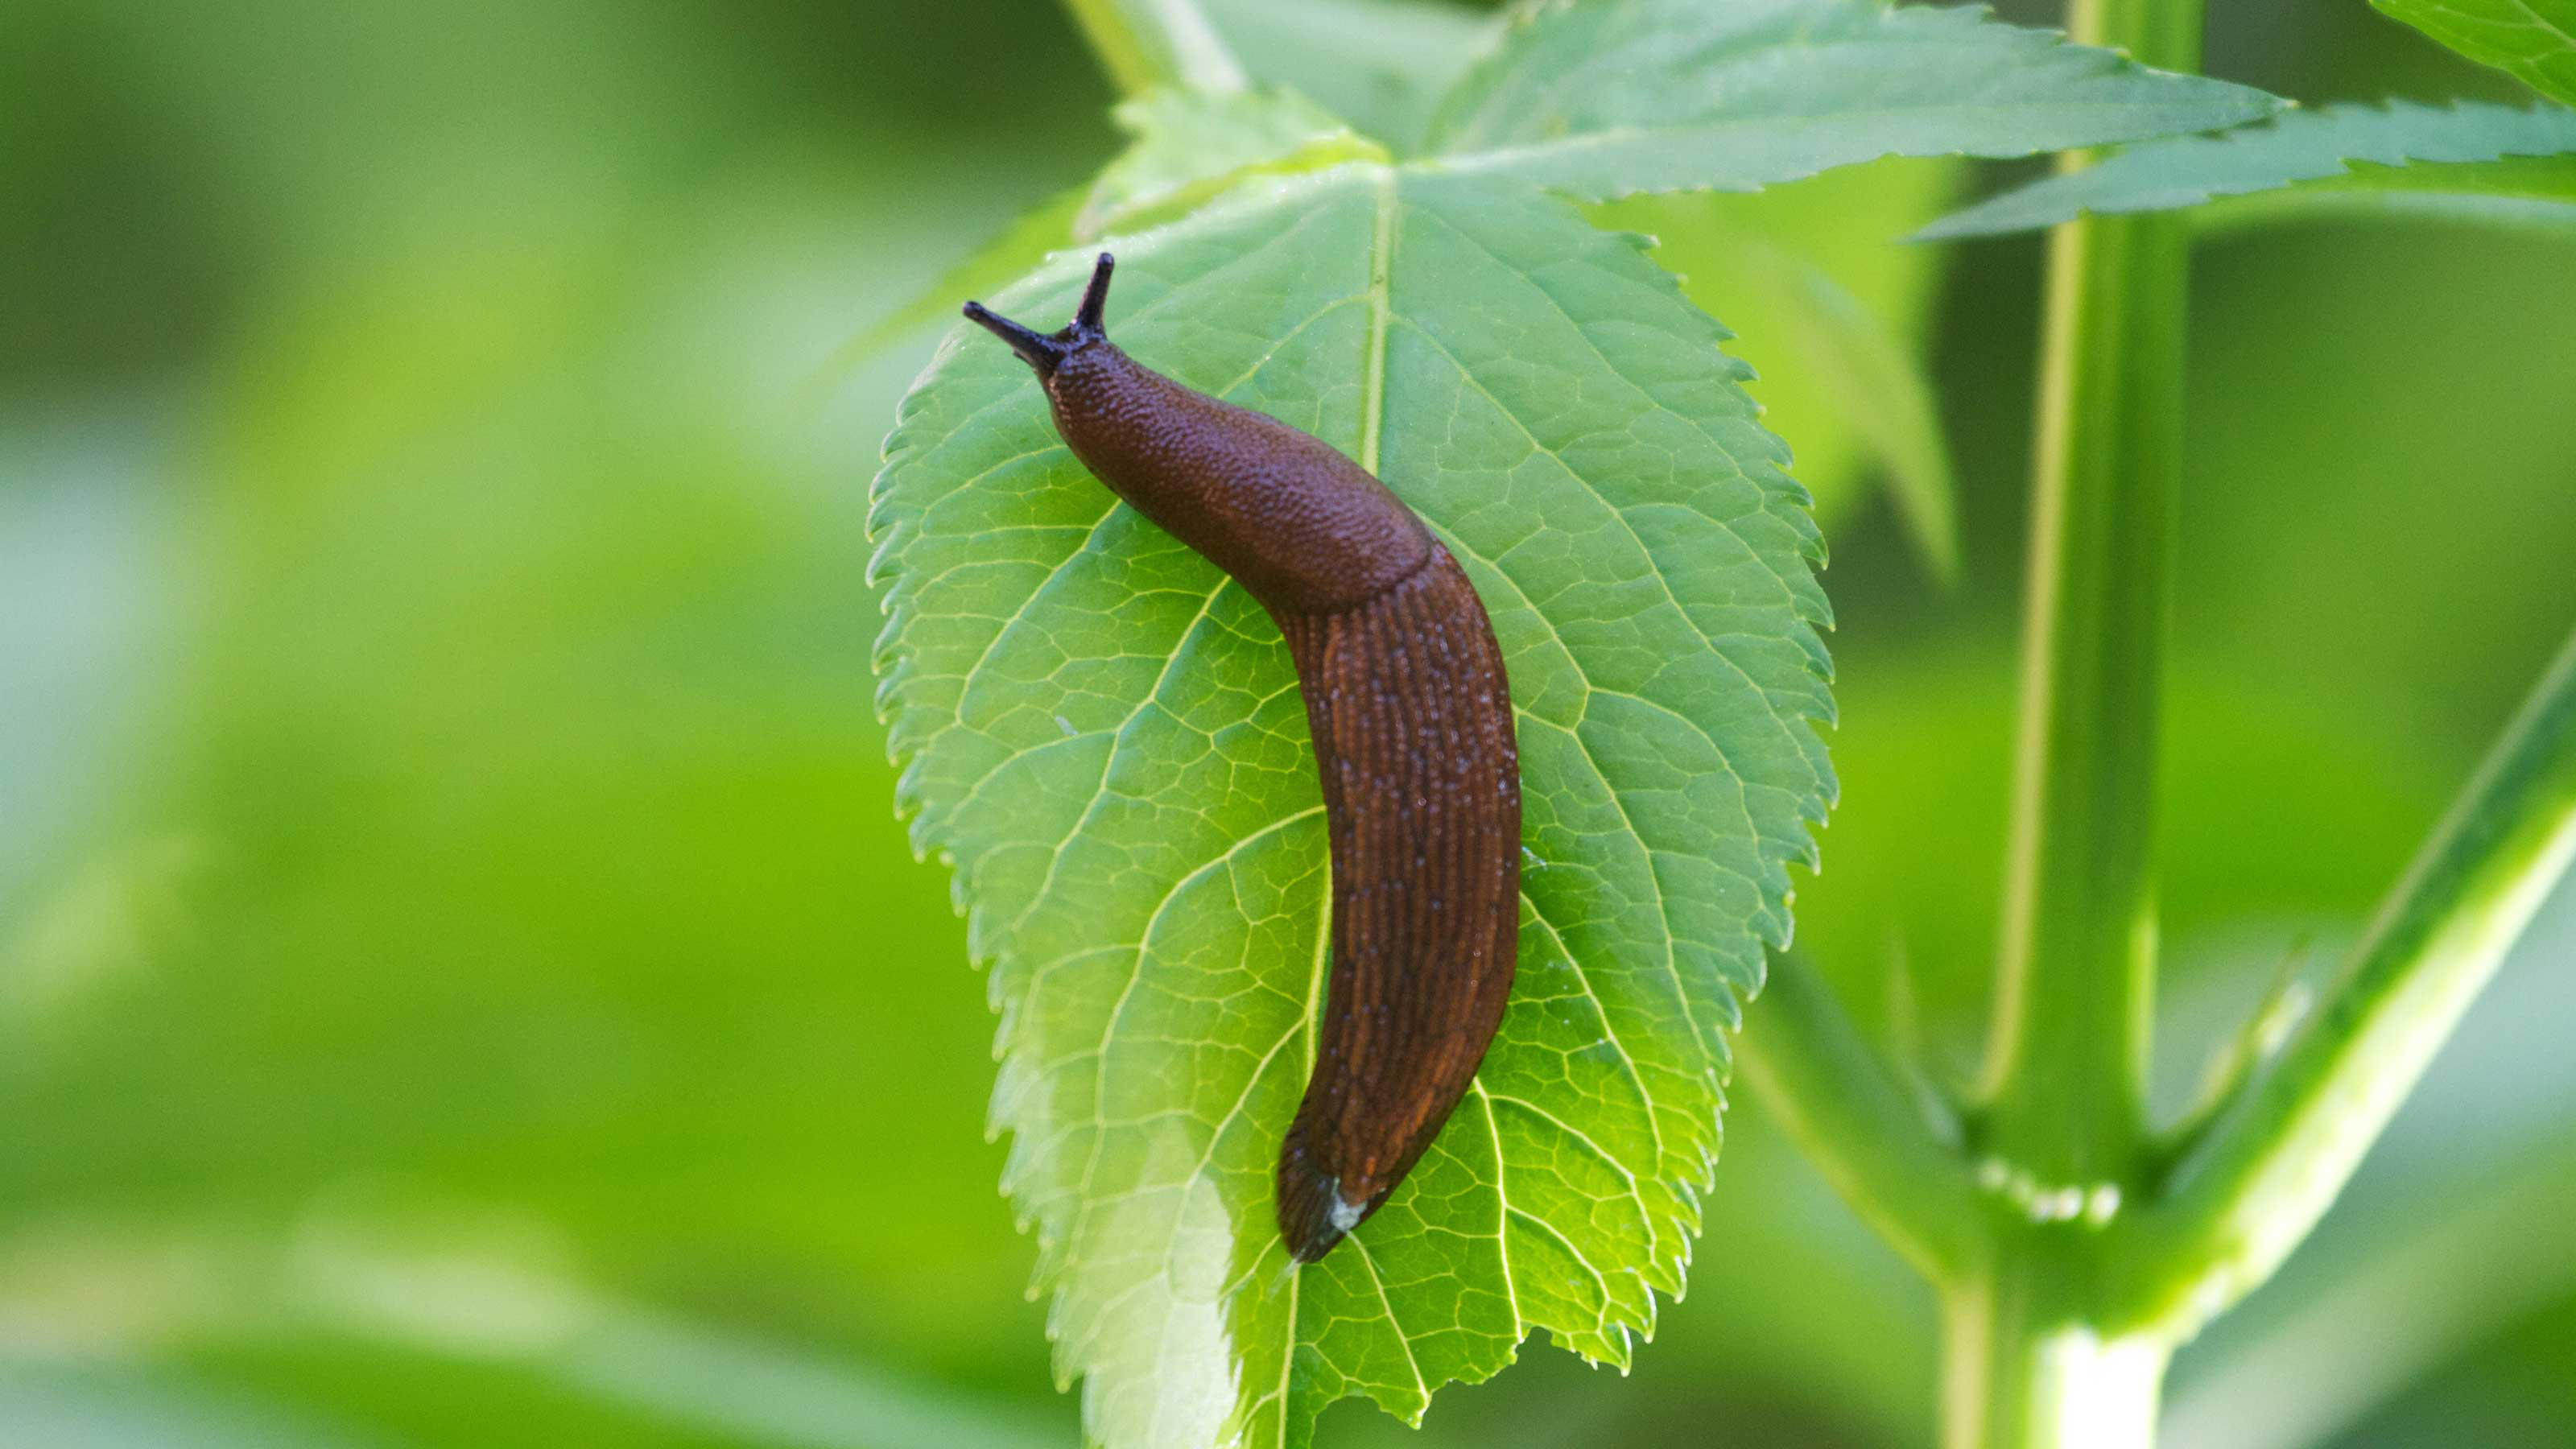 slugs in the garden